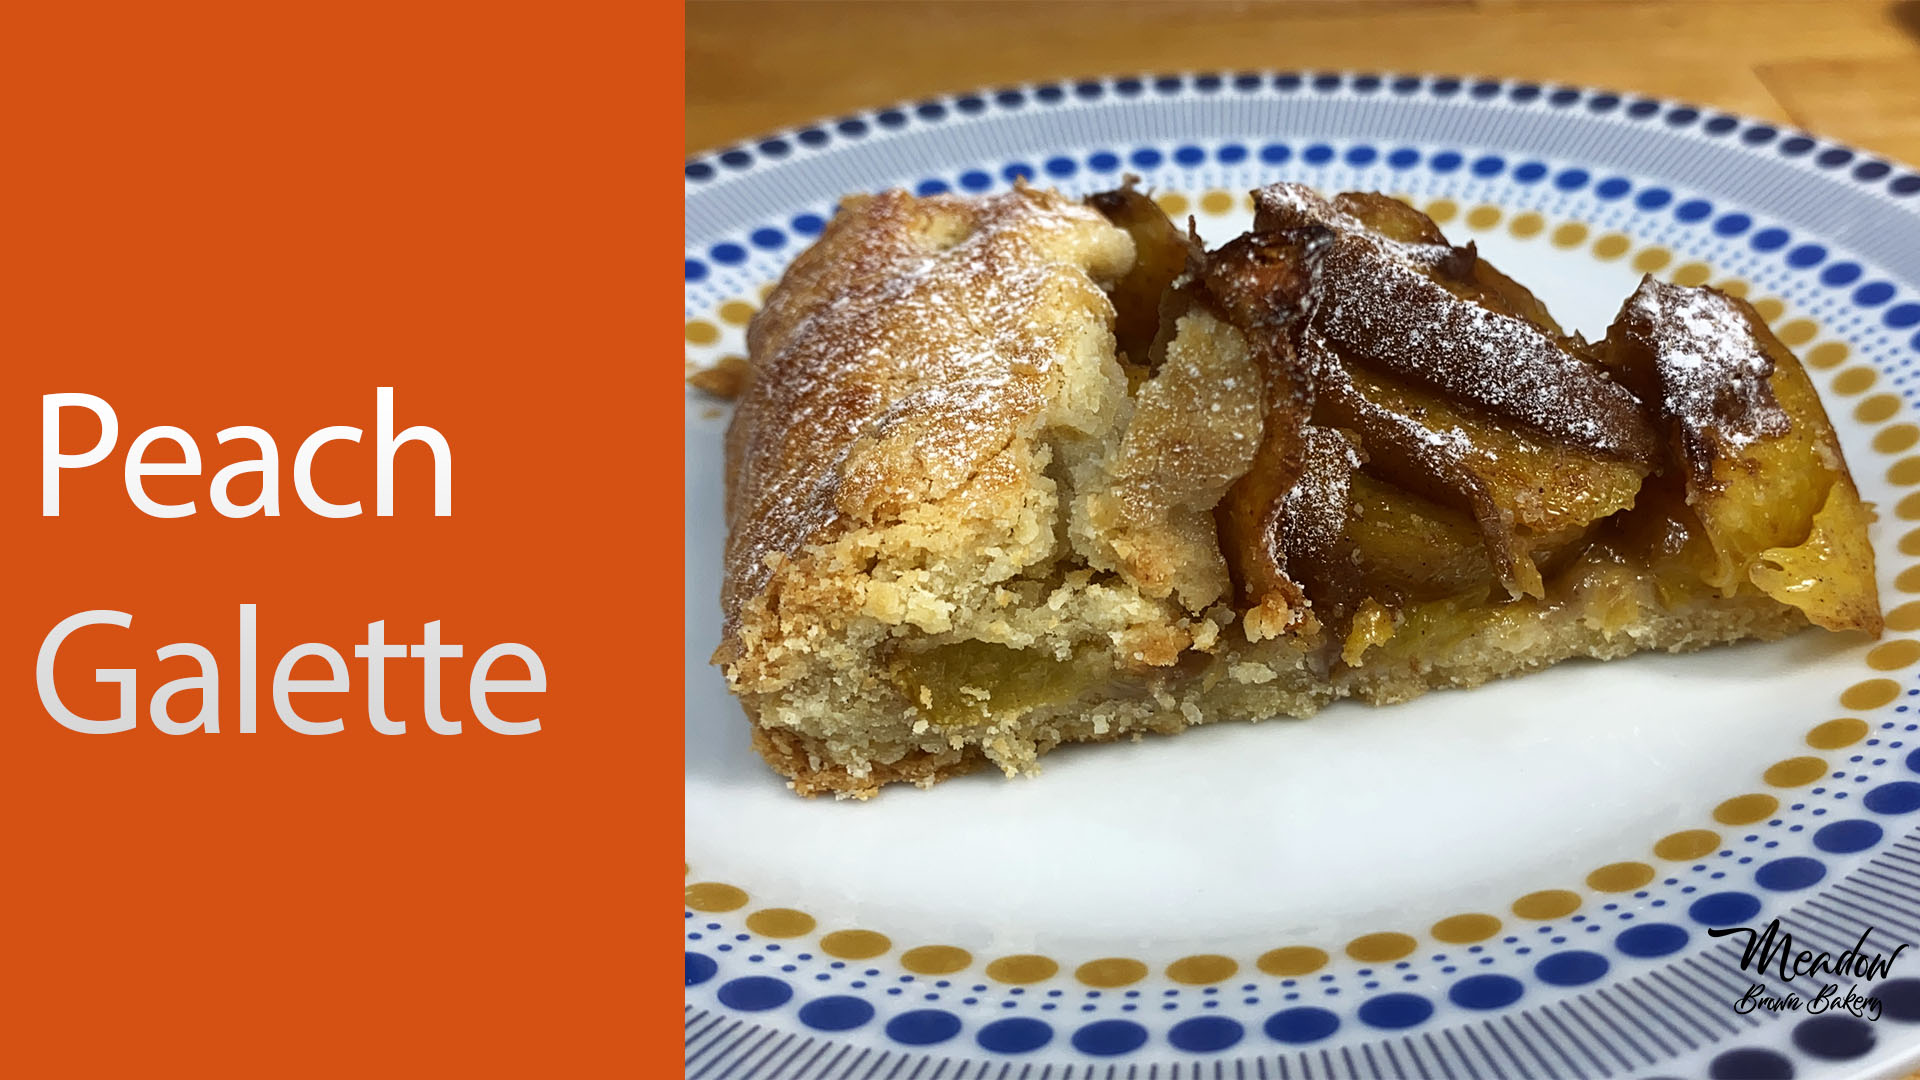 Peach galette : Galette pastry recipe